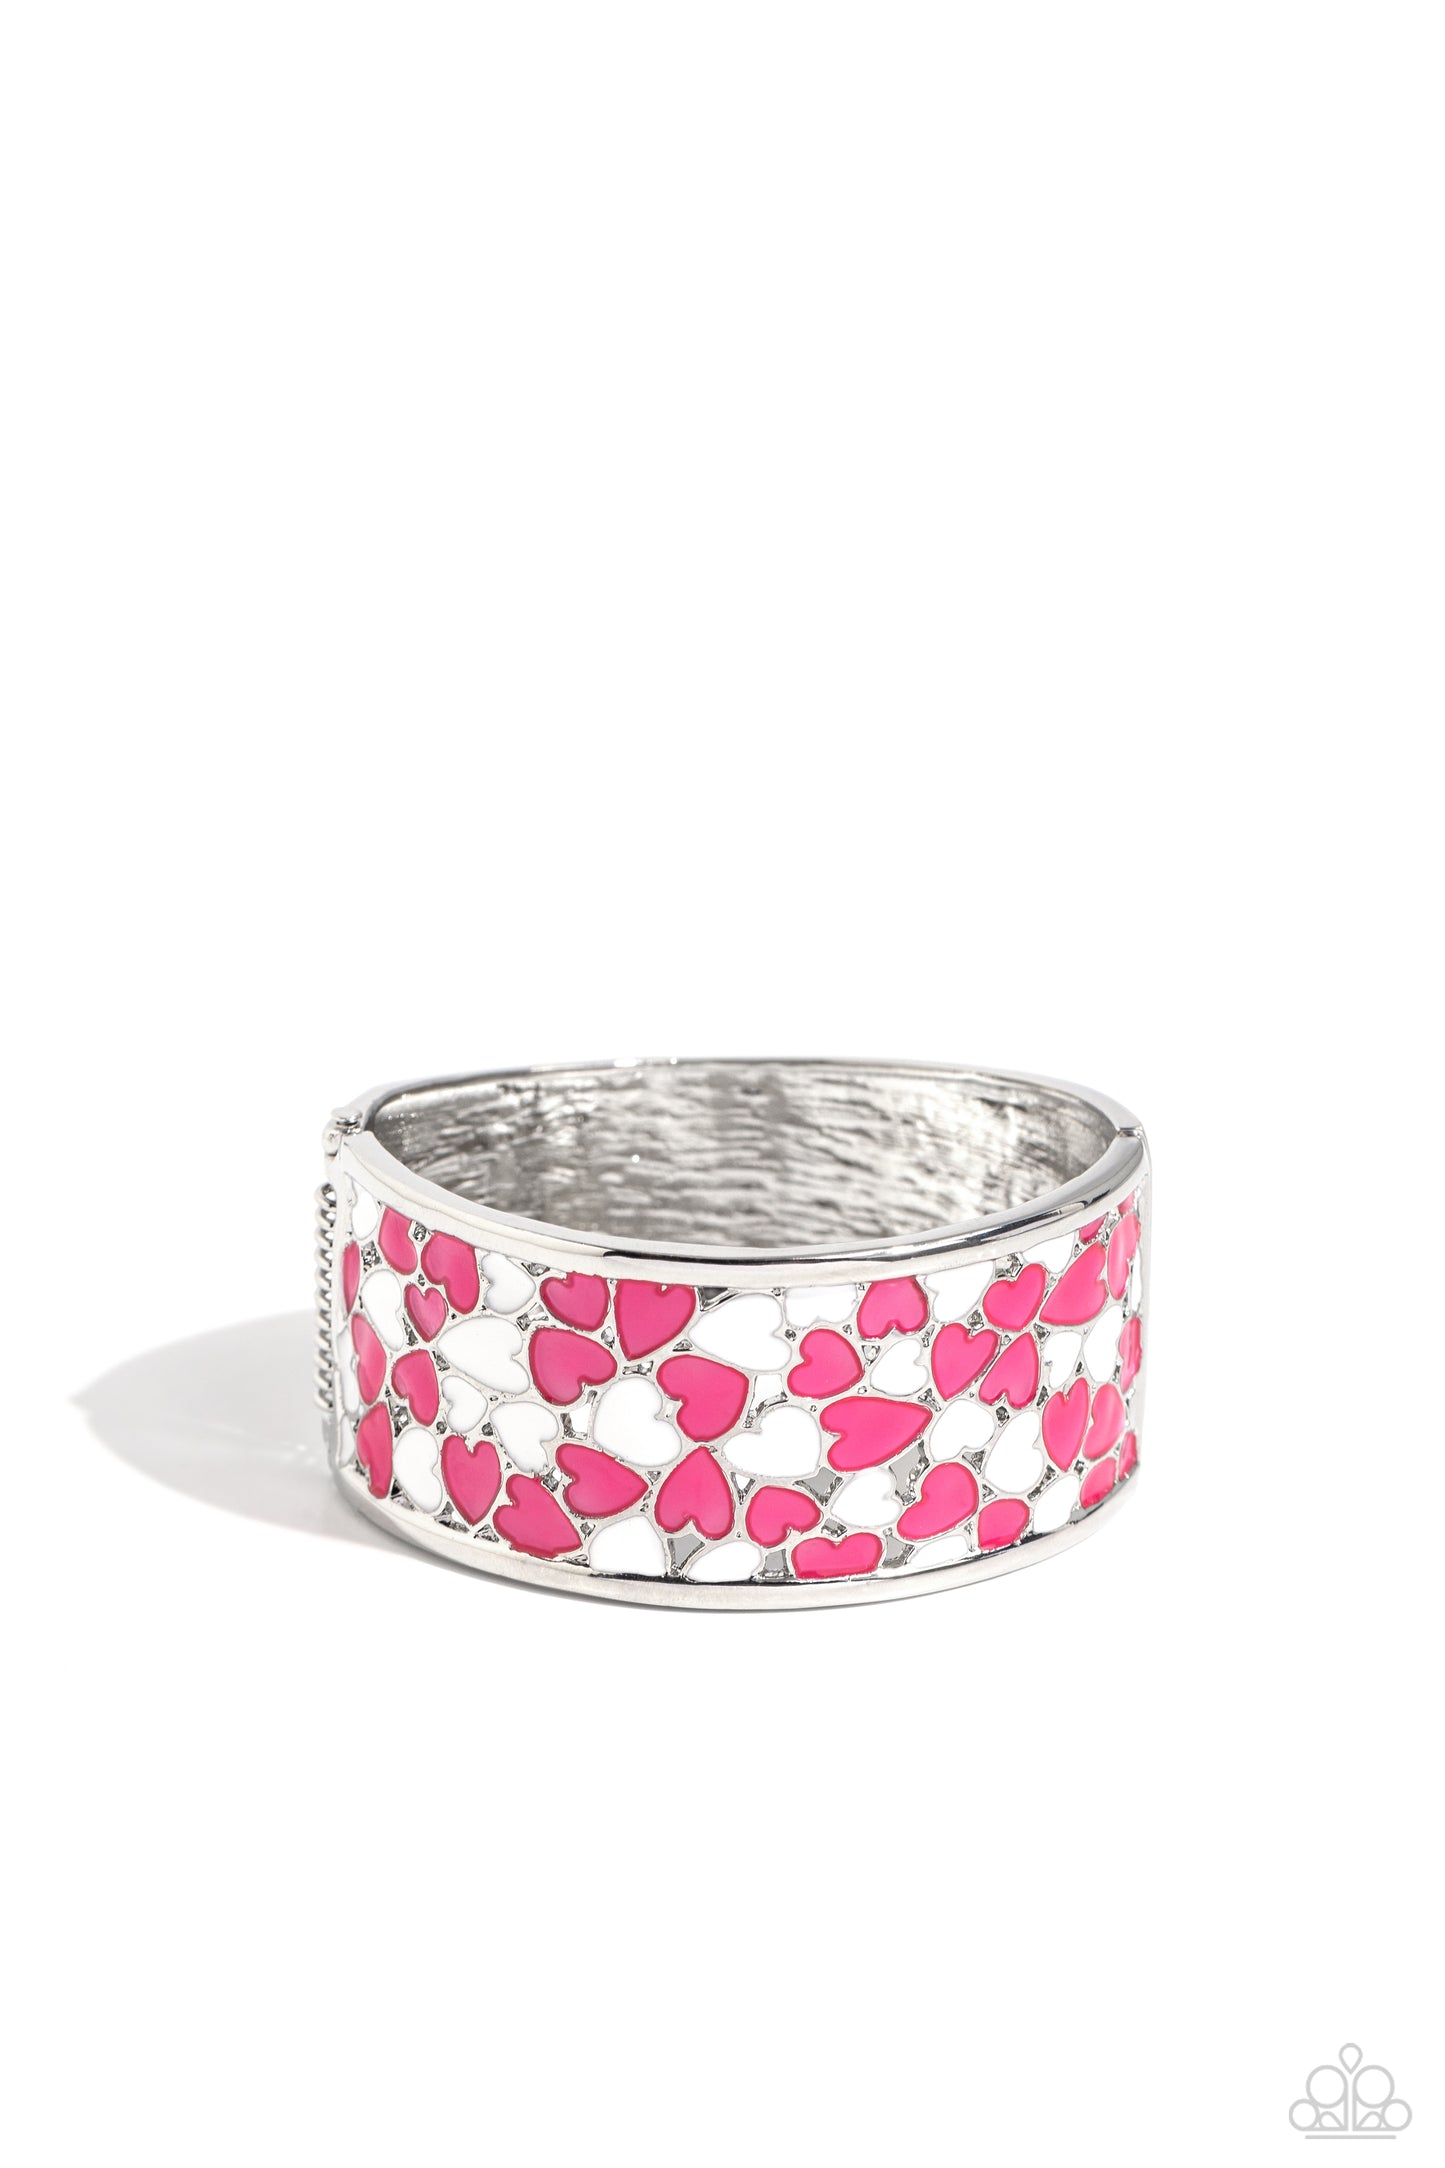 Penchant for Patterns - pink - Paparazzi bracelet